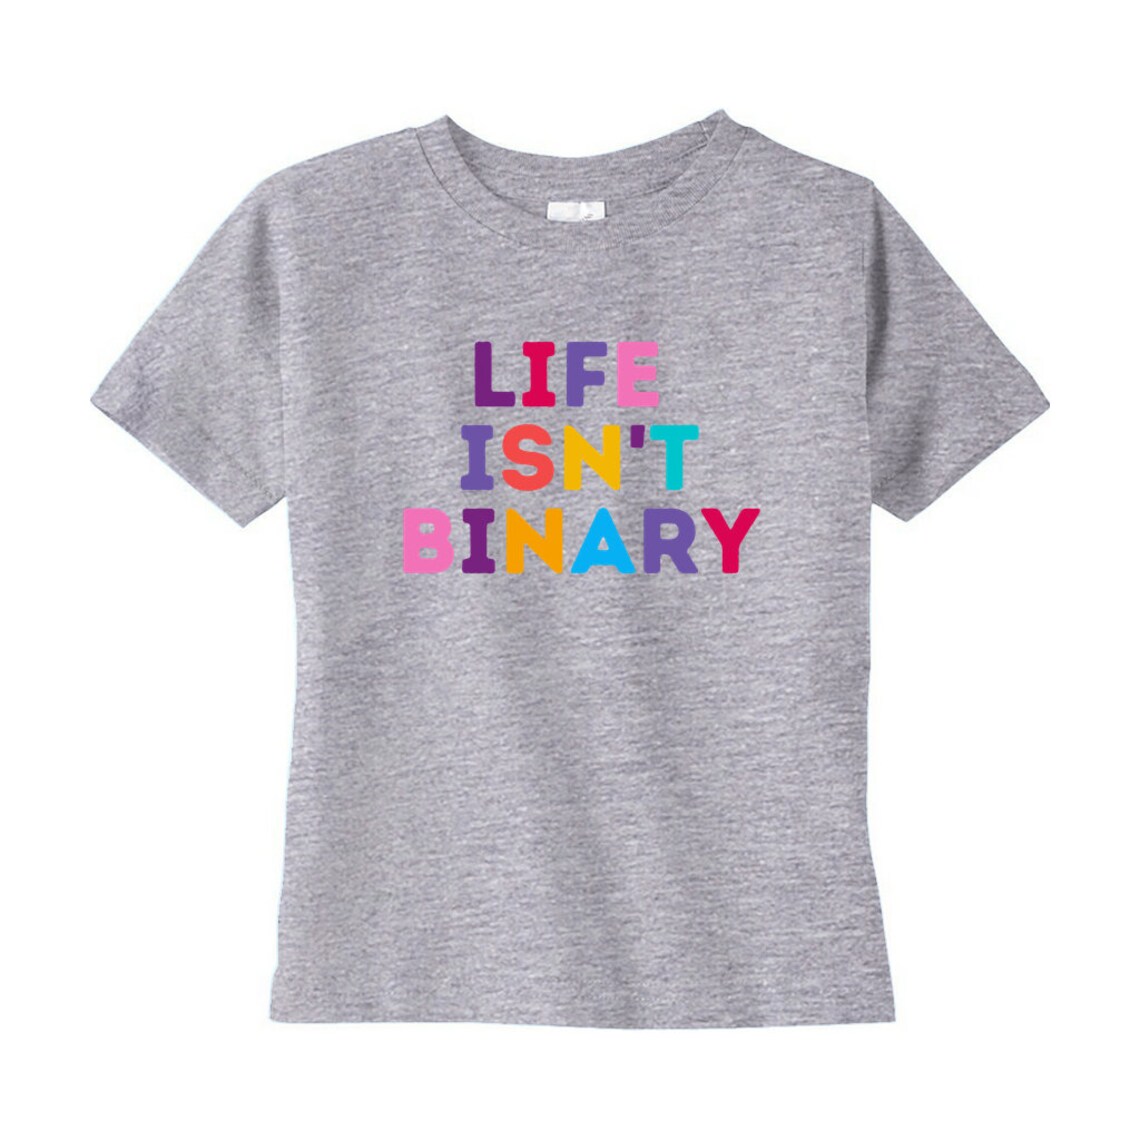 Life Isn't Binary Toddler T-shirt Non-binary Gender | Etsy